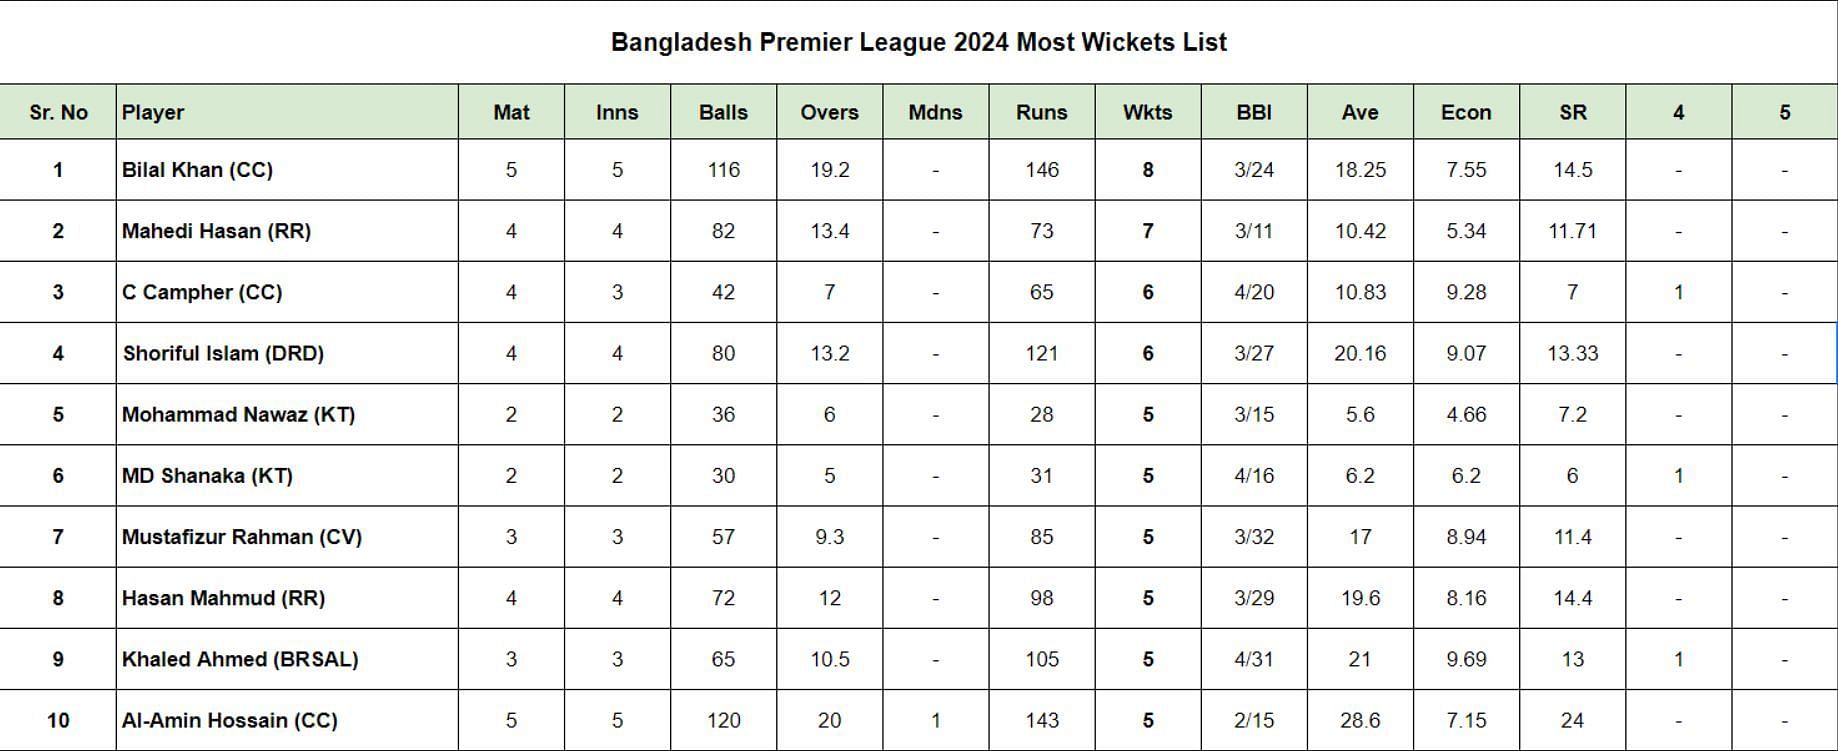 Bangladesh Premier League 2024 Most Wickets List updated after Match 14